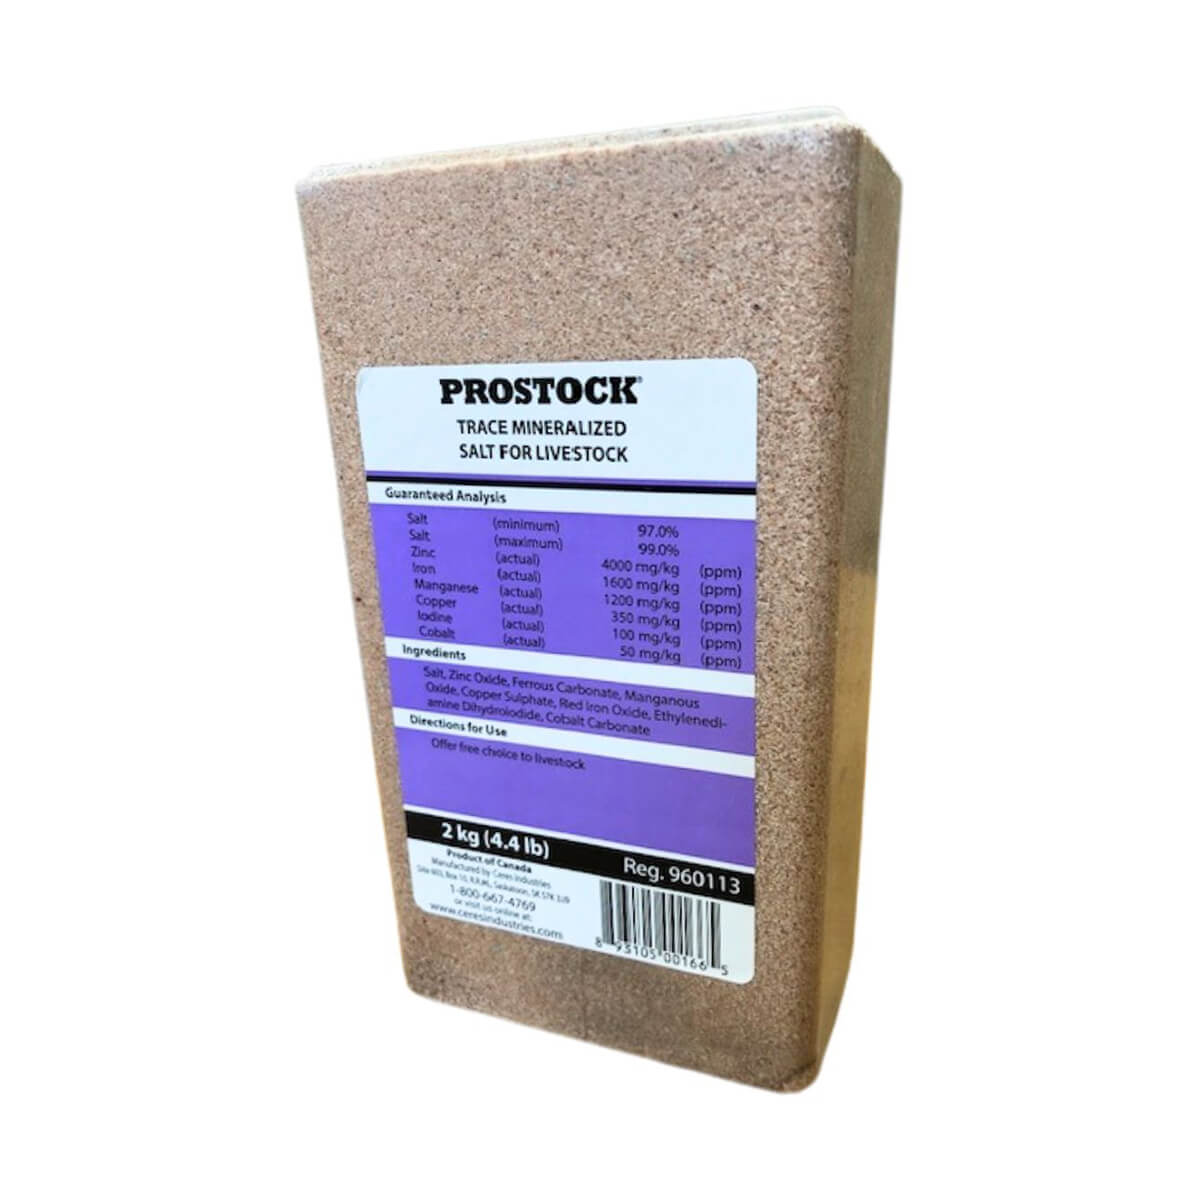 PROSTOCK™ Trace Mineralized Salt - 2 kg